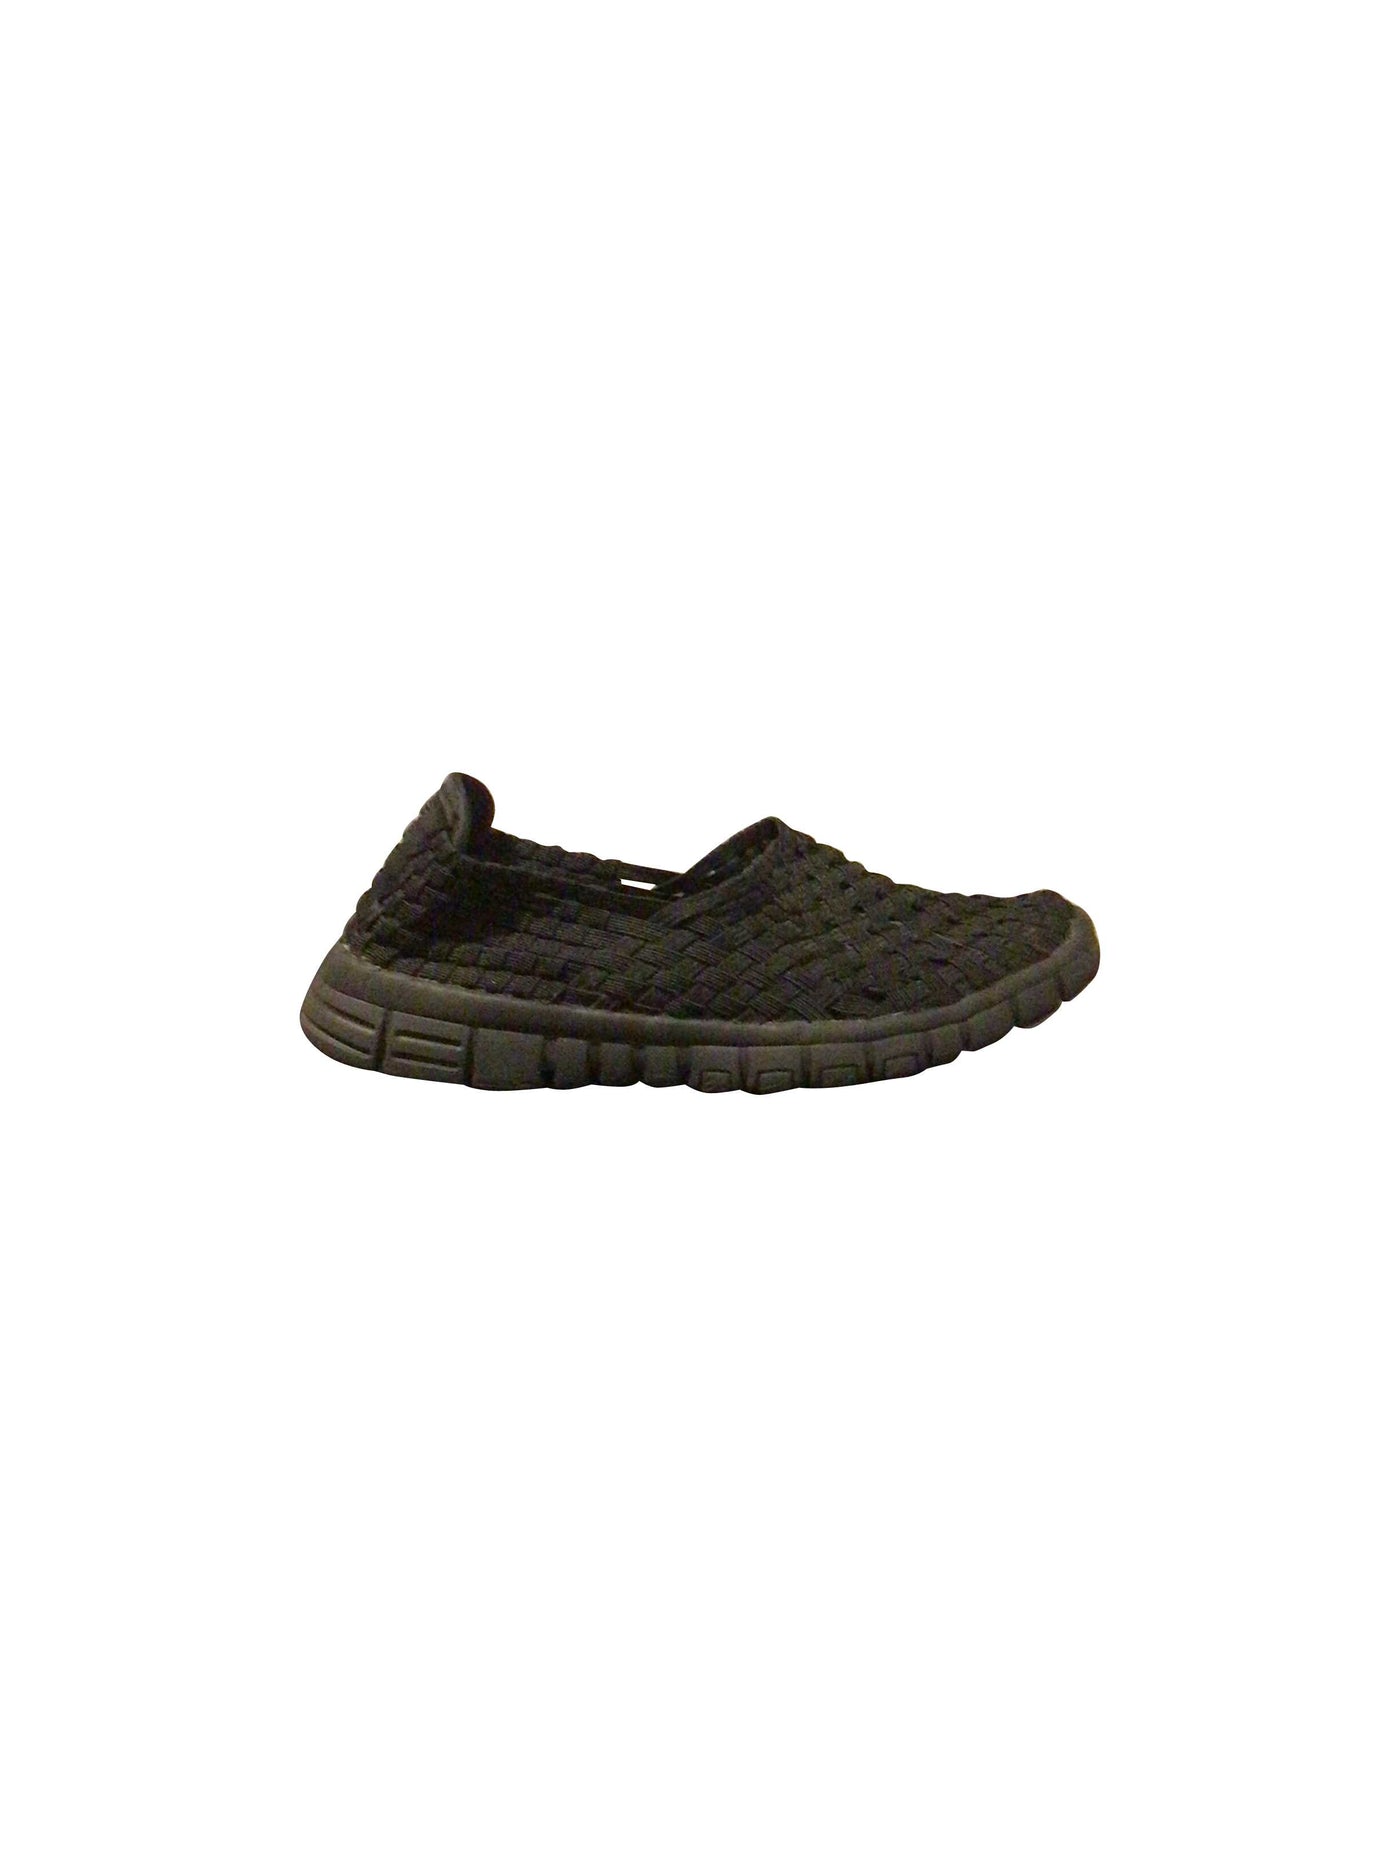 MISS SMART Flats Shoes in Black  -  39  13.99 Koop